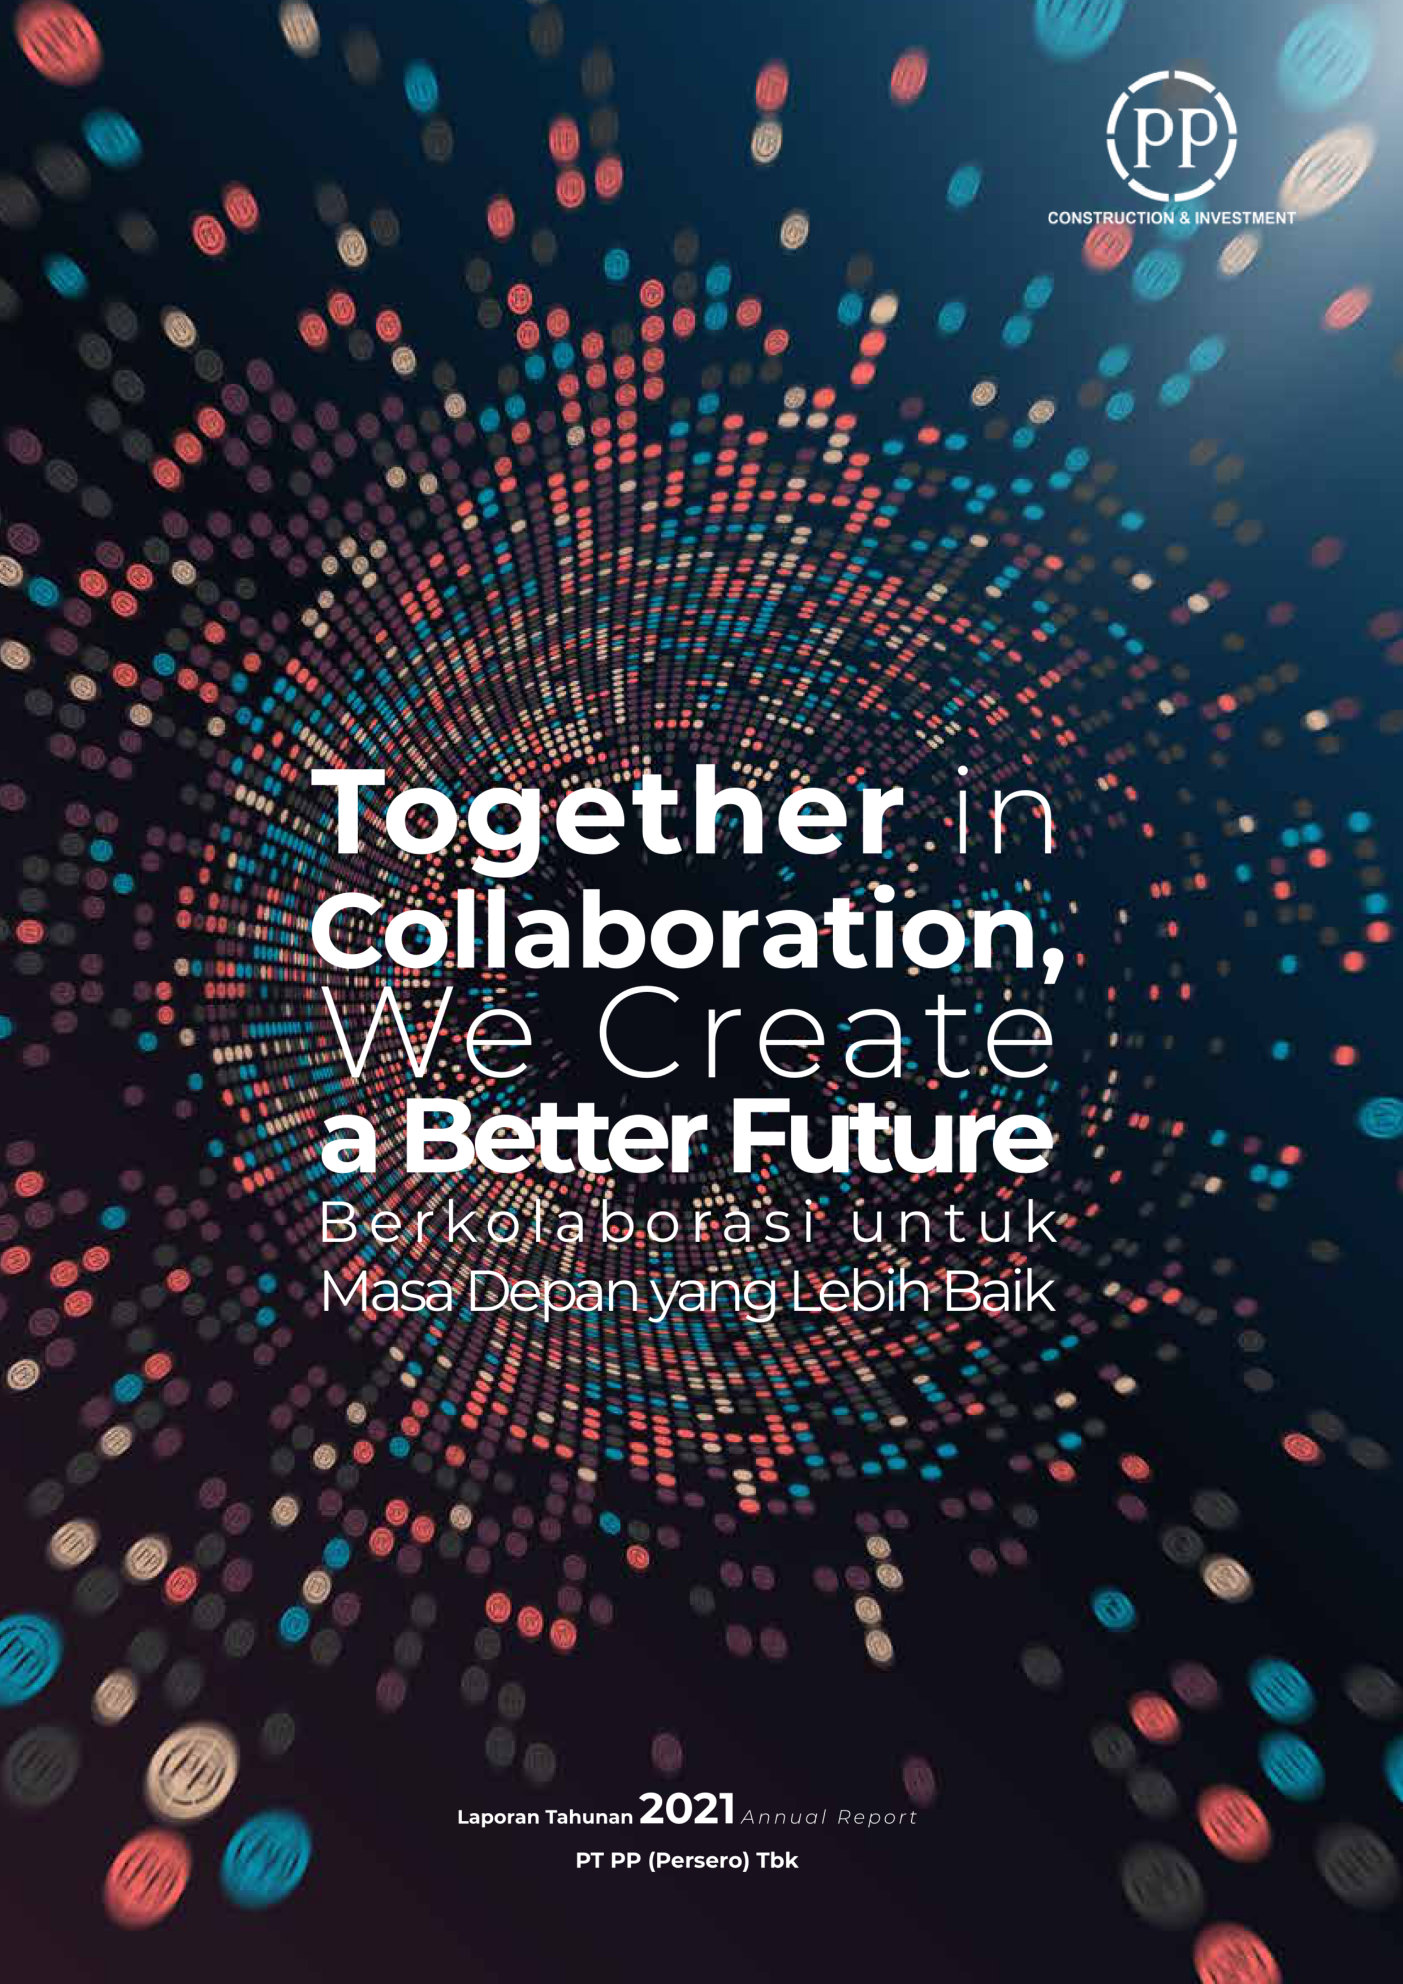 Together in Collaboration, We Create a Better Future / Berkolaborasi untuk Masa Depan yang Lebih Baik